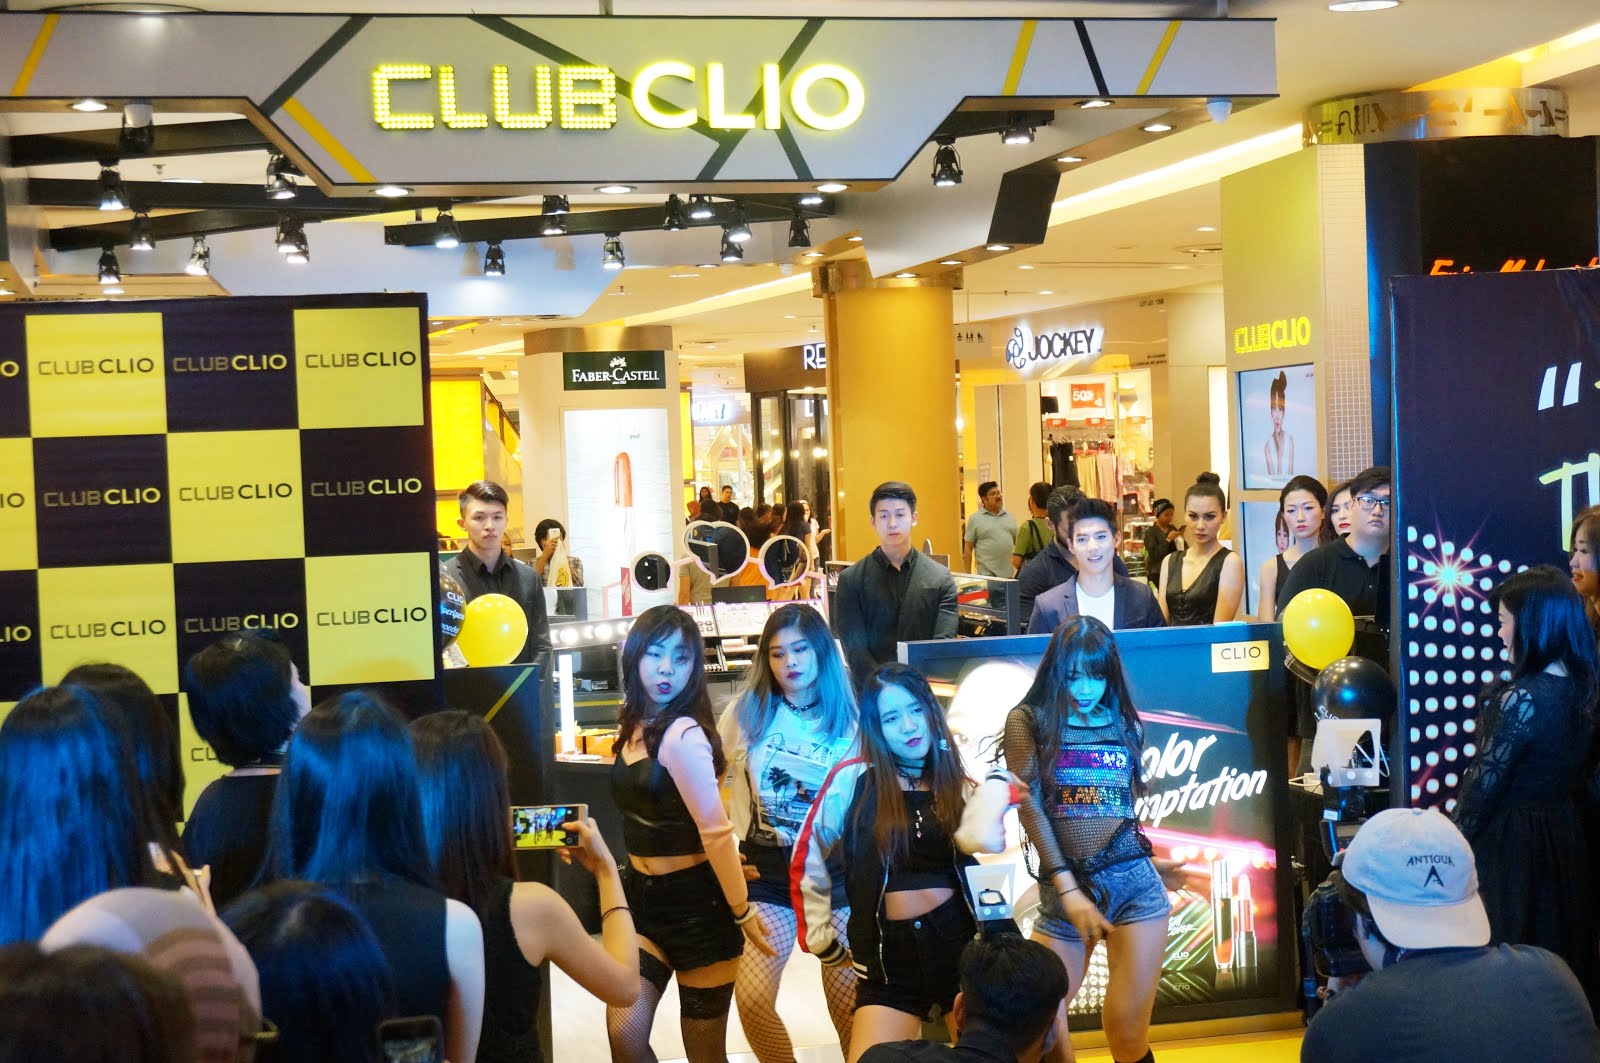 Clio Club Launch @ Sunway Pyramid - Cindy's Planet